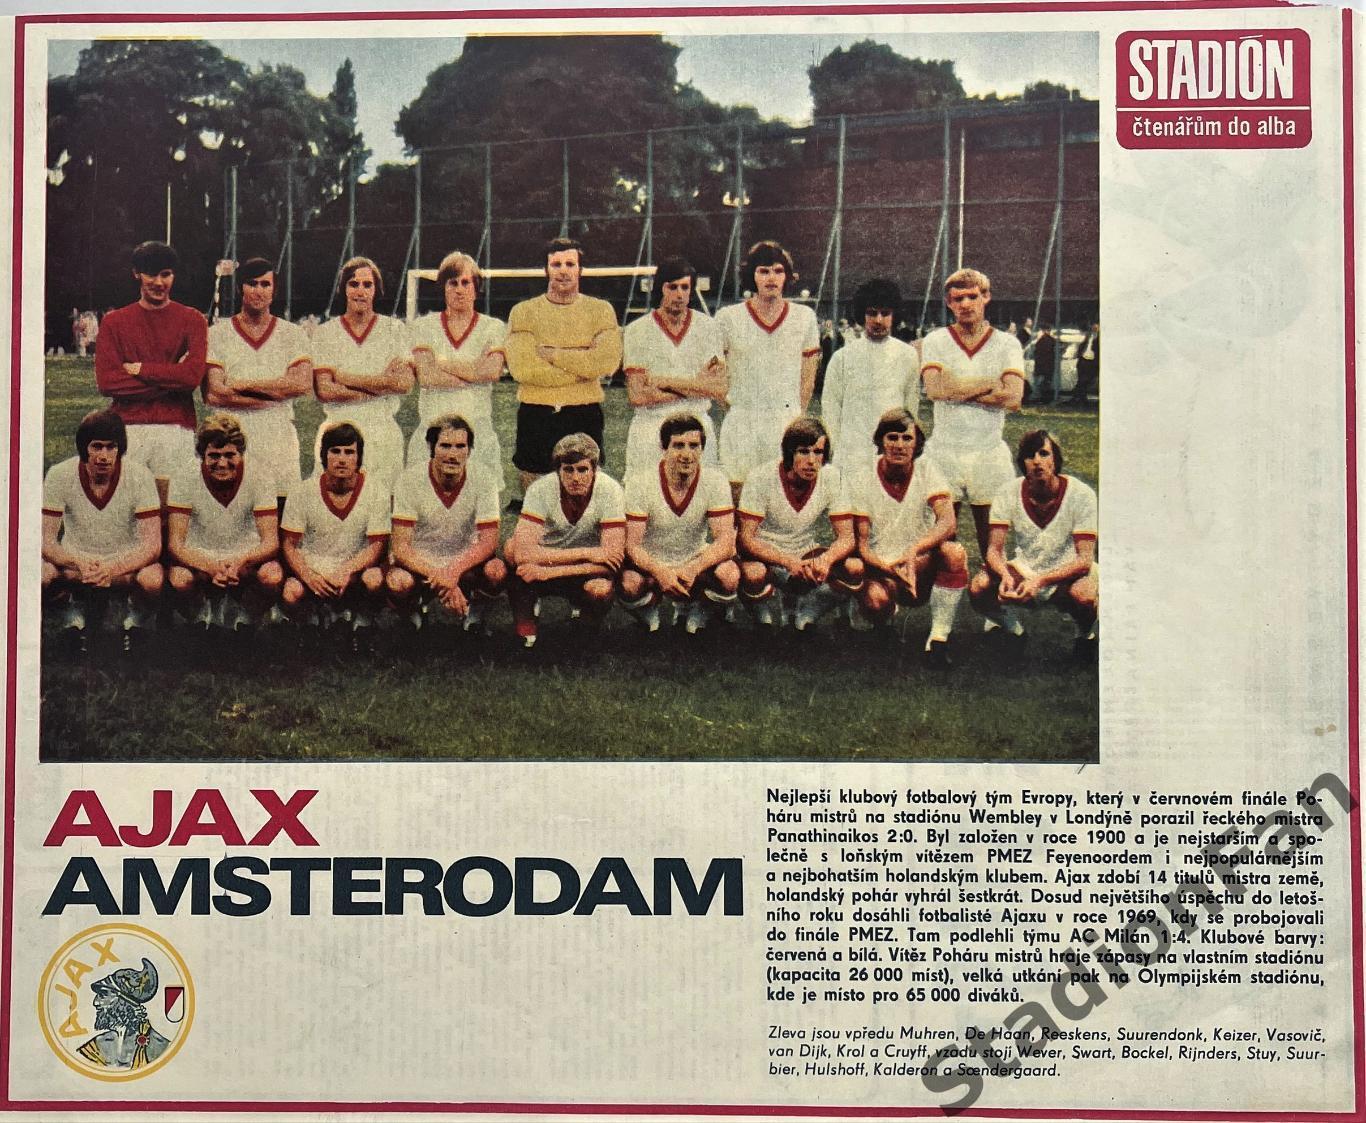 Постер из журнала Стадион (Stadion) - Ajax Amsterdam, 1971.